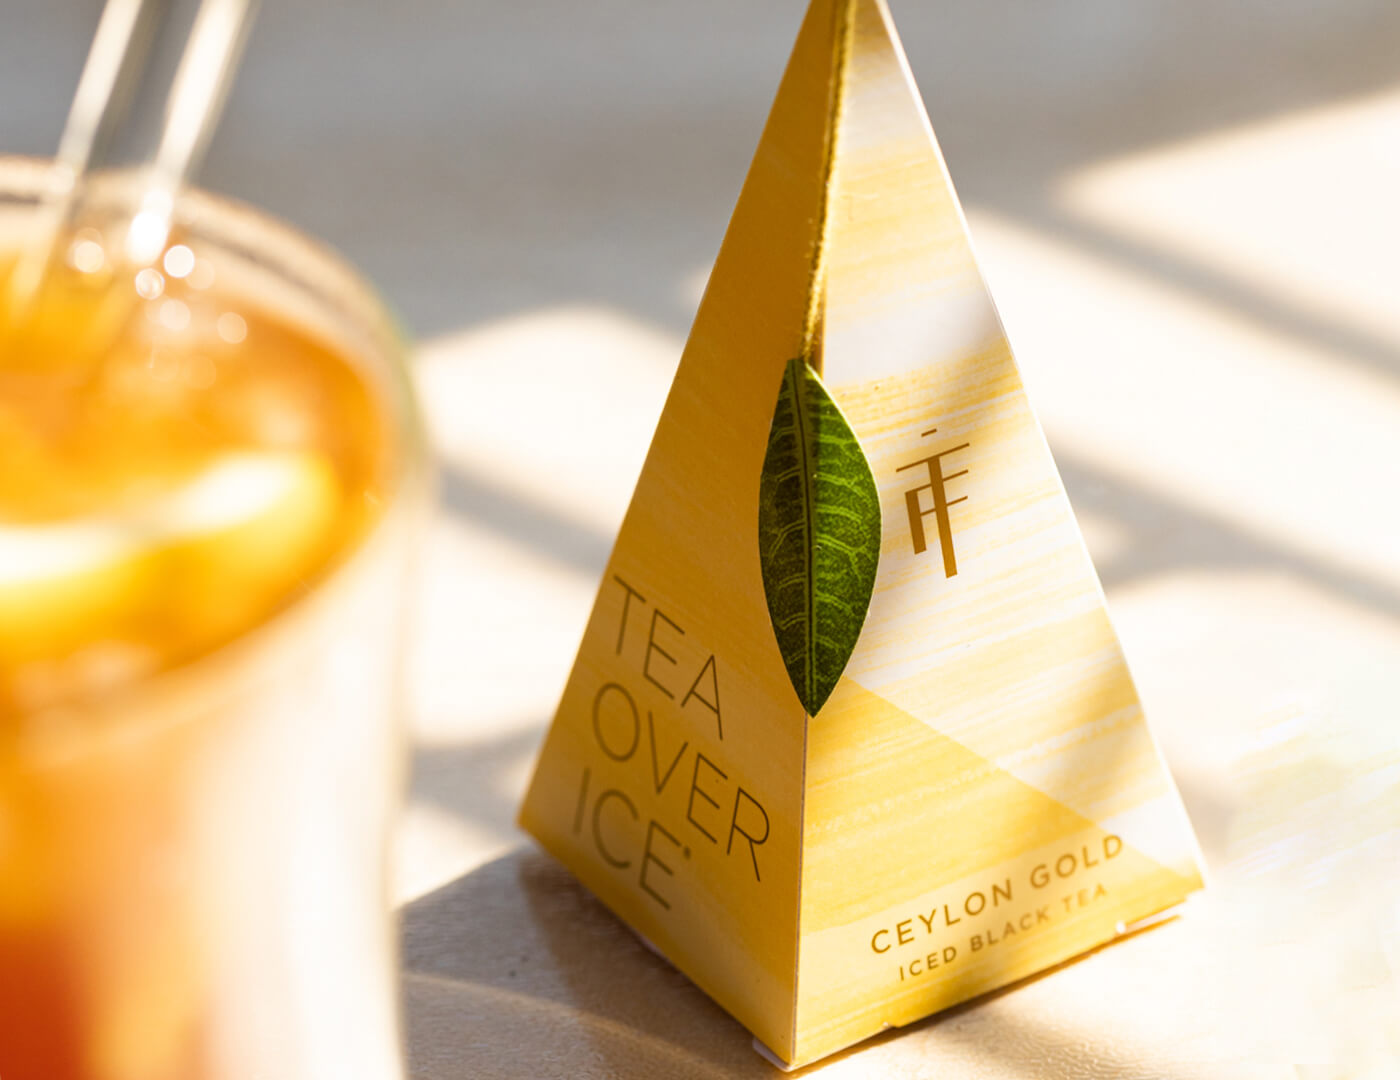 Ceylon Gold iced tea pyramid infuser